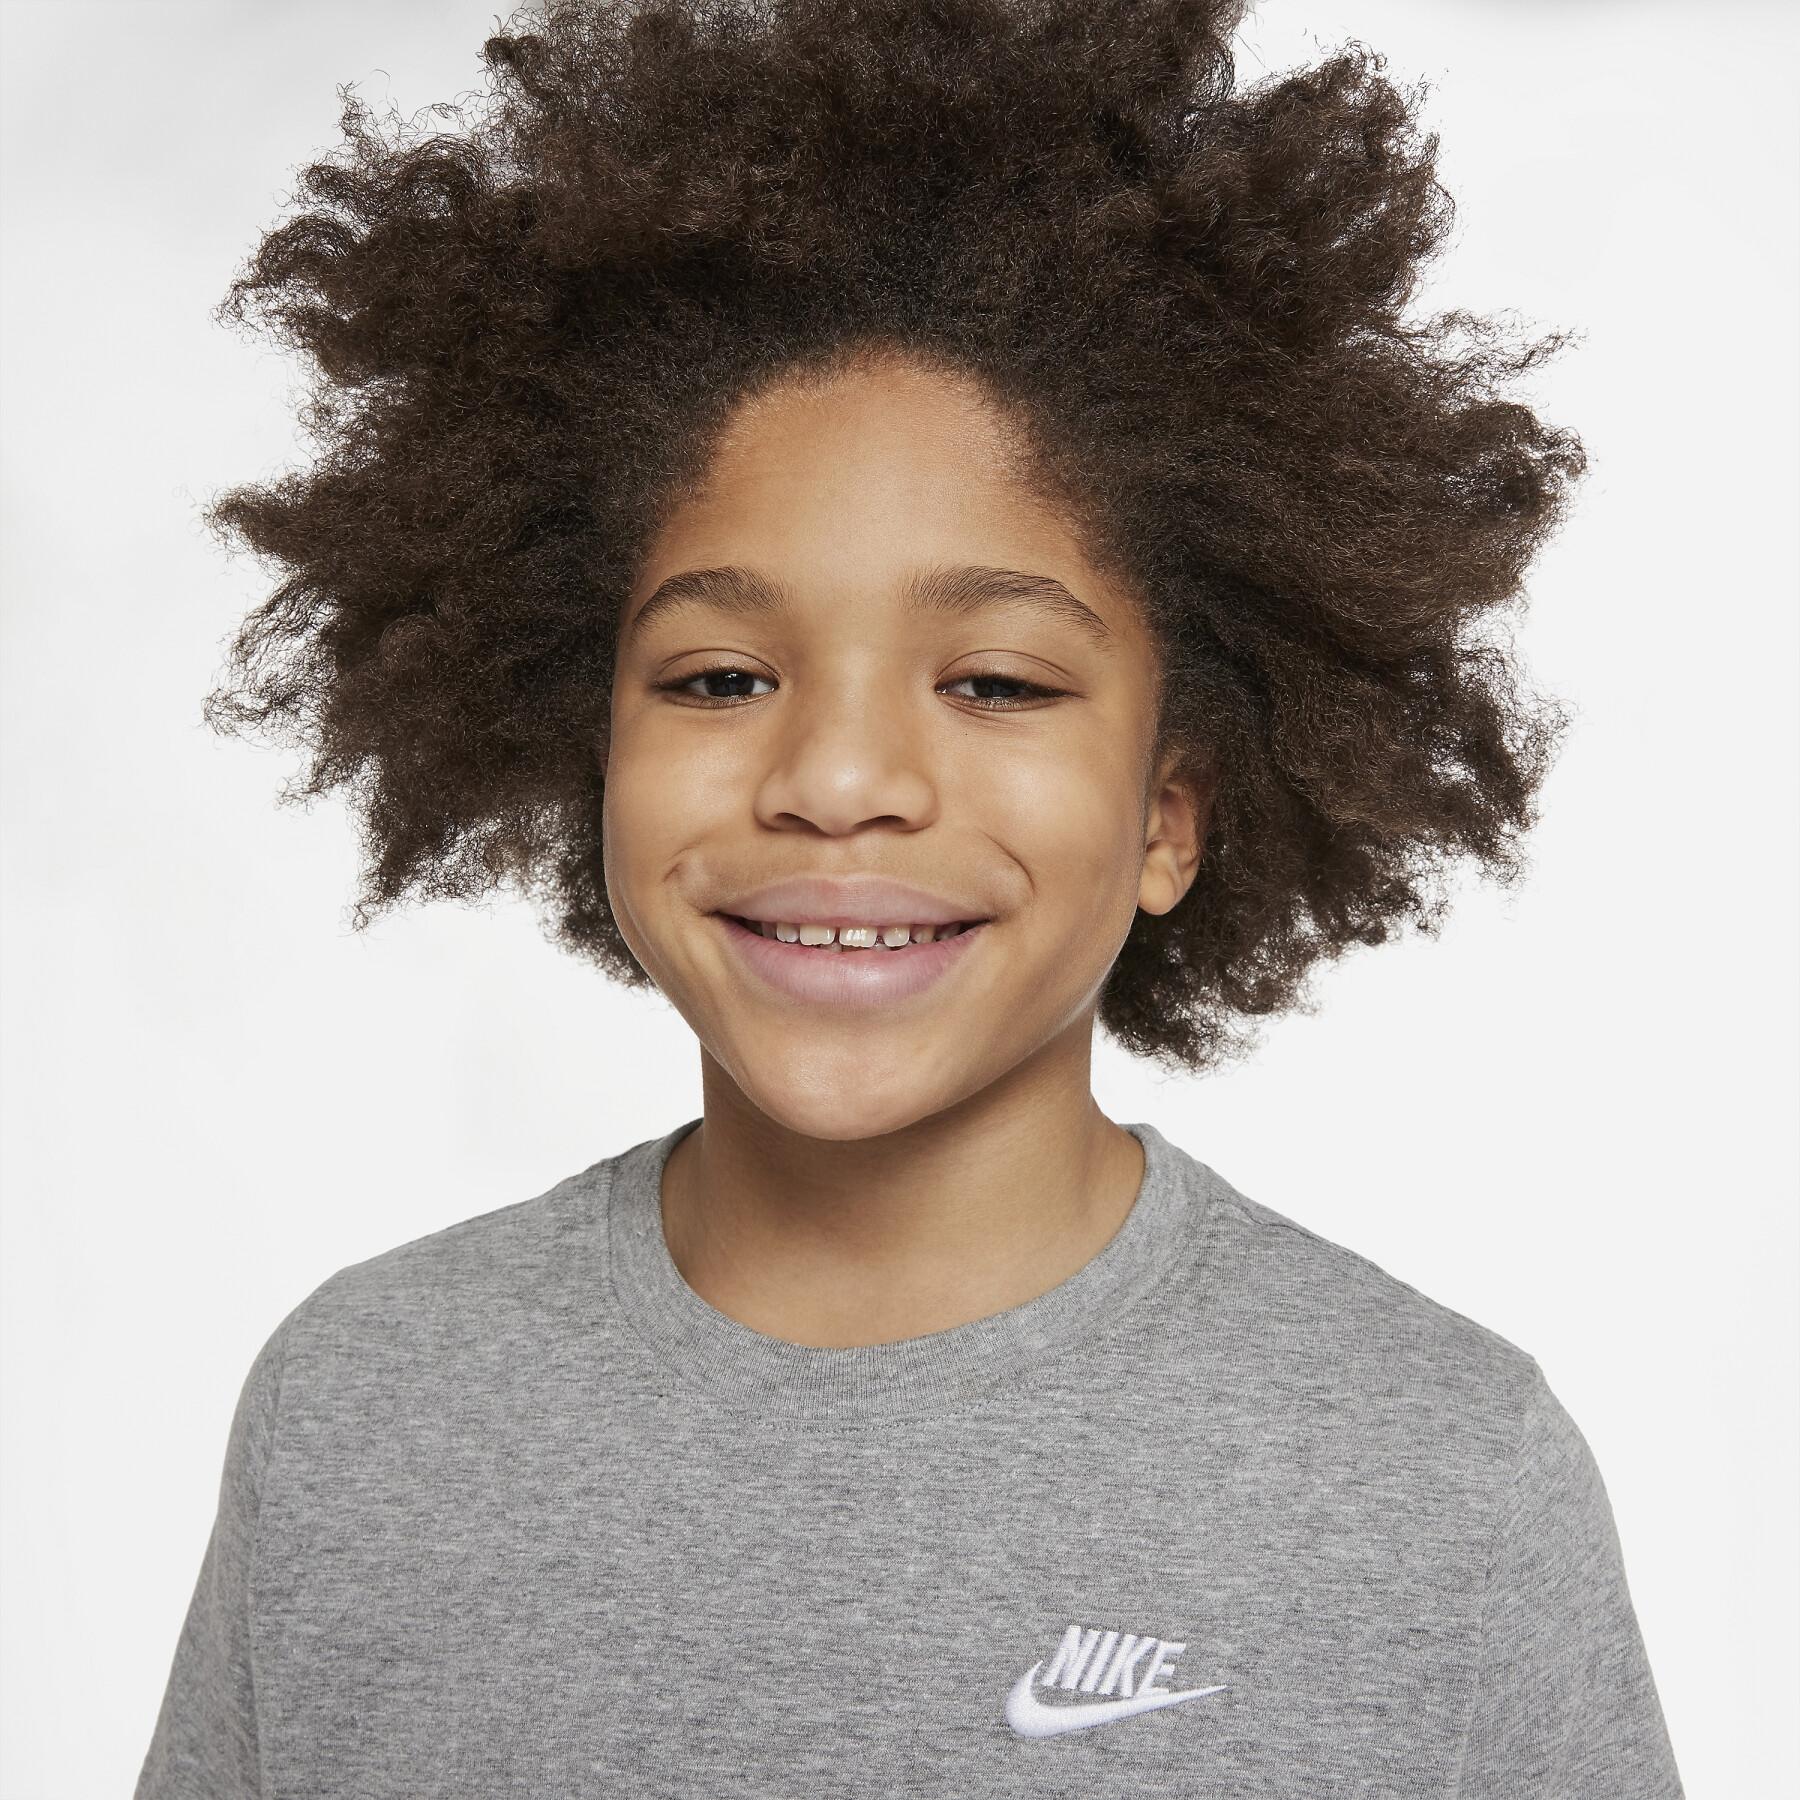 Maglietta per bambini Nike Sportswear